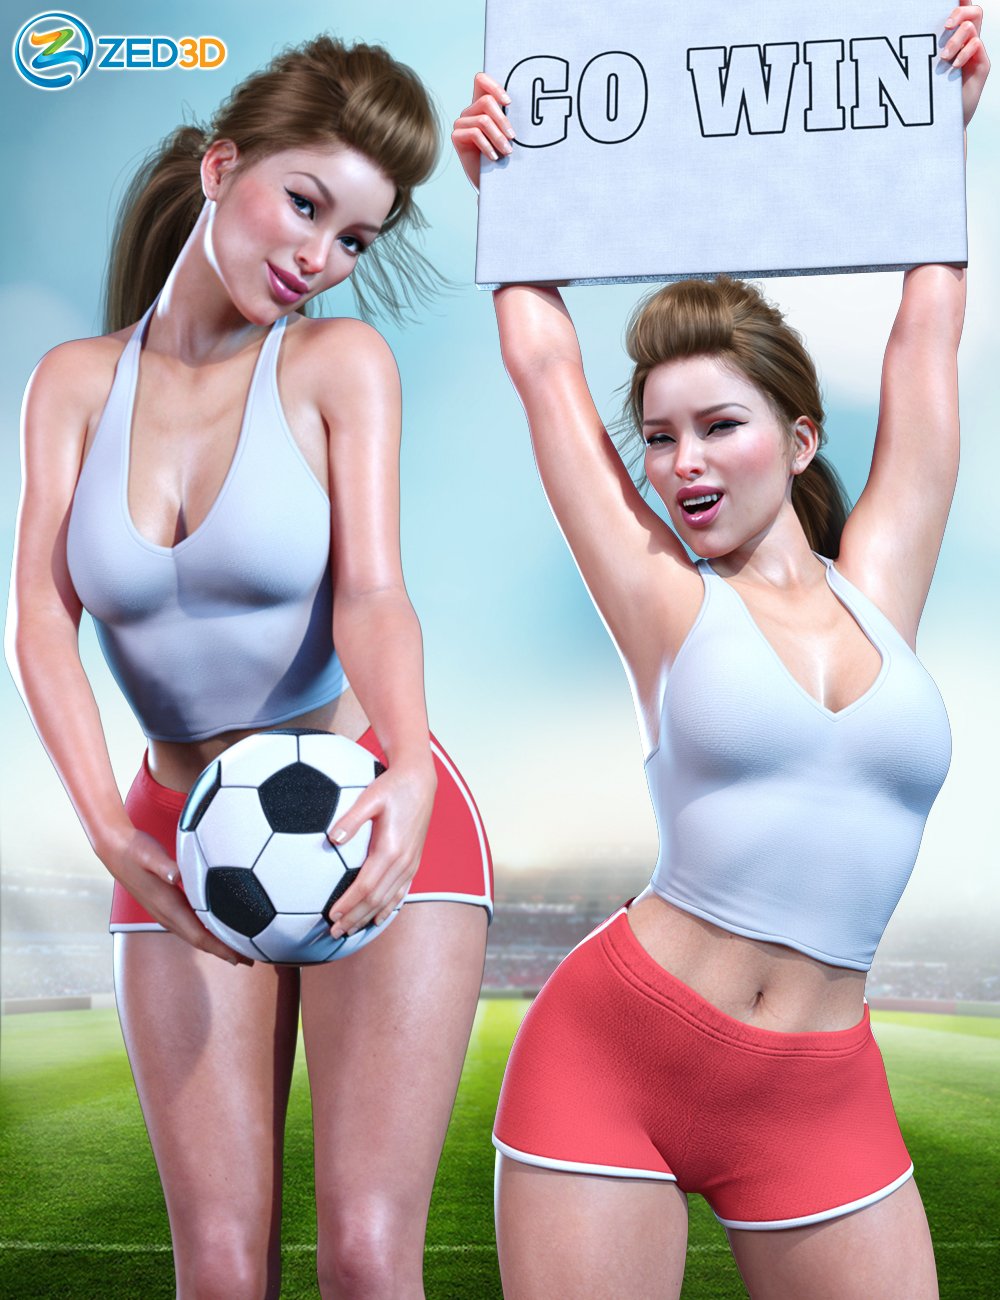 Z Cheerleader Shape and Pose Mega Set by: Zeddicuss, 3D Models by Daz 3D